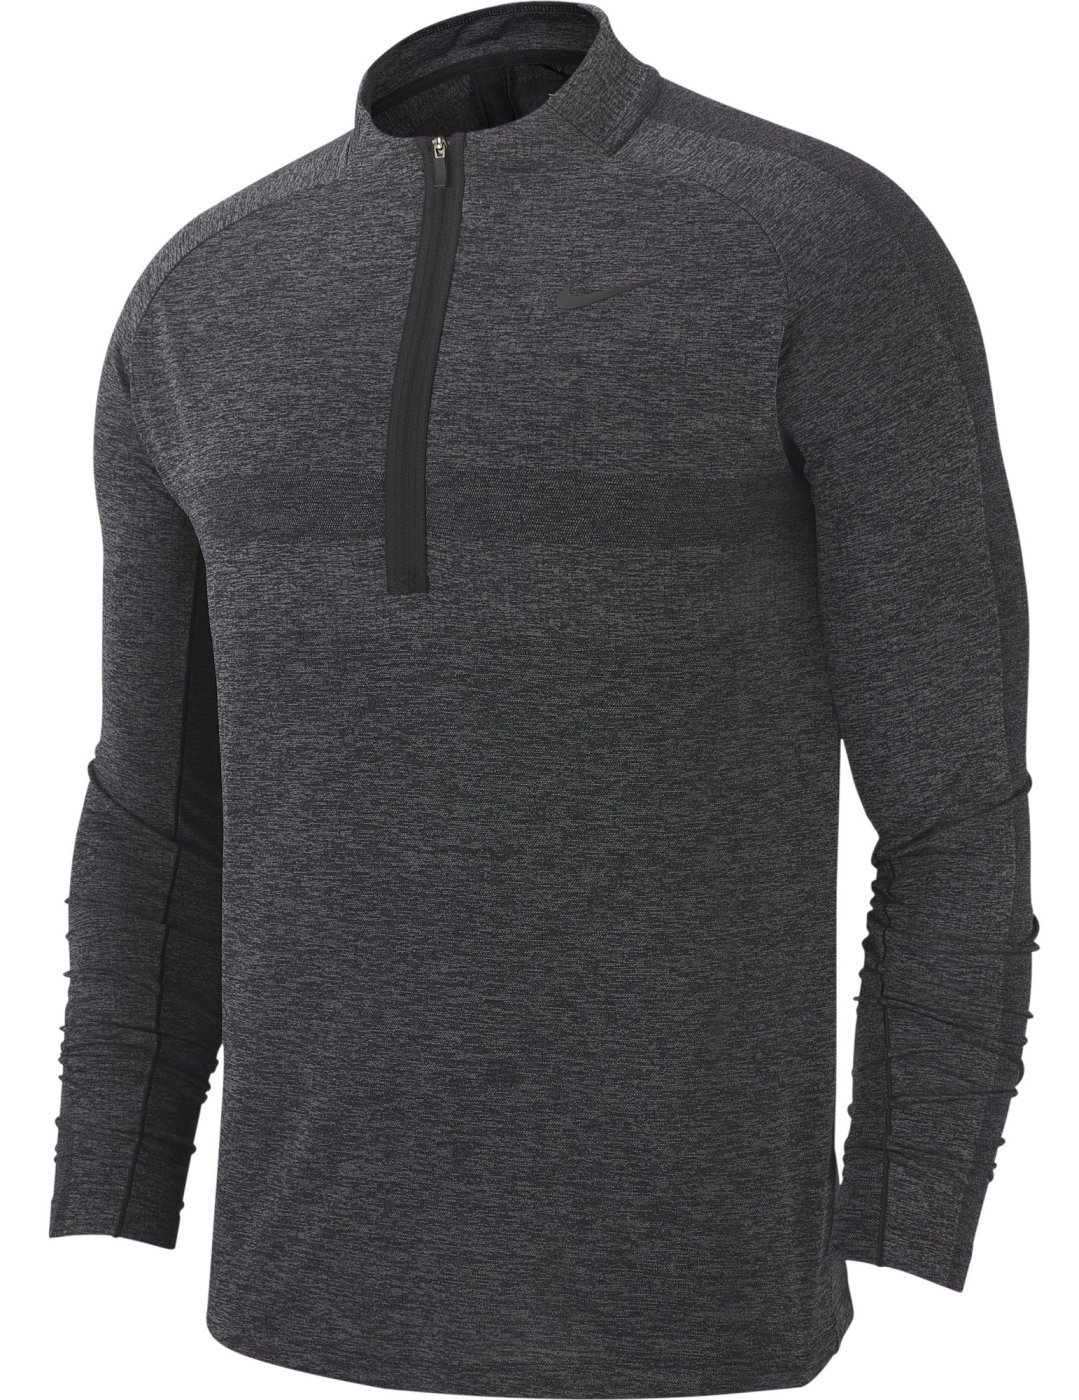 Hoodie/Sweater Nike Dry Knit Statement 1/2 Zip Mens Sweater Black/Dark Grey L